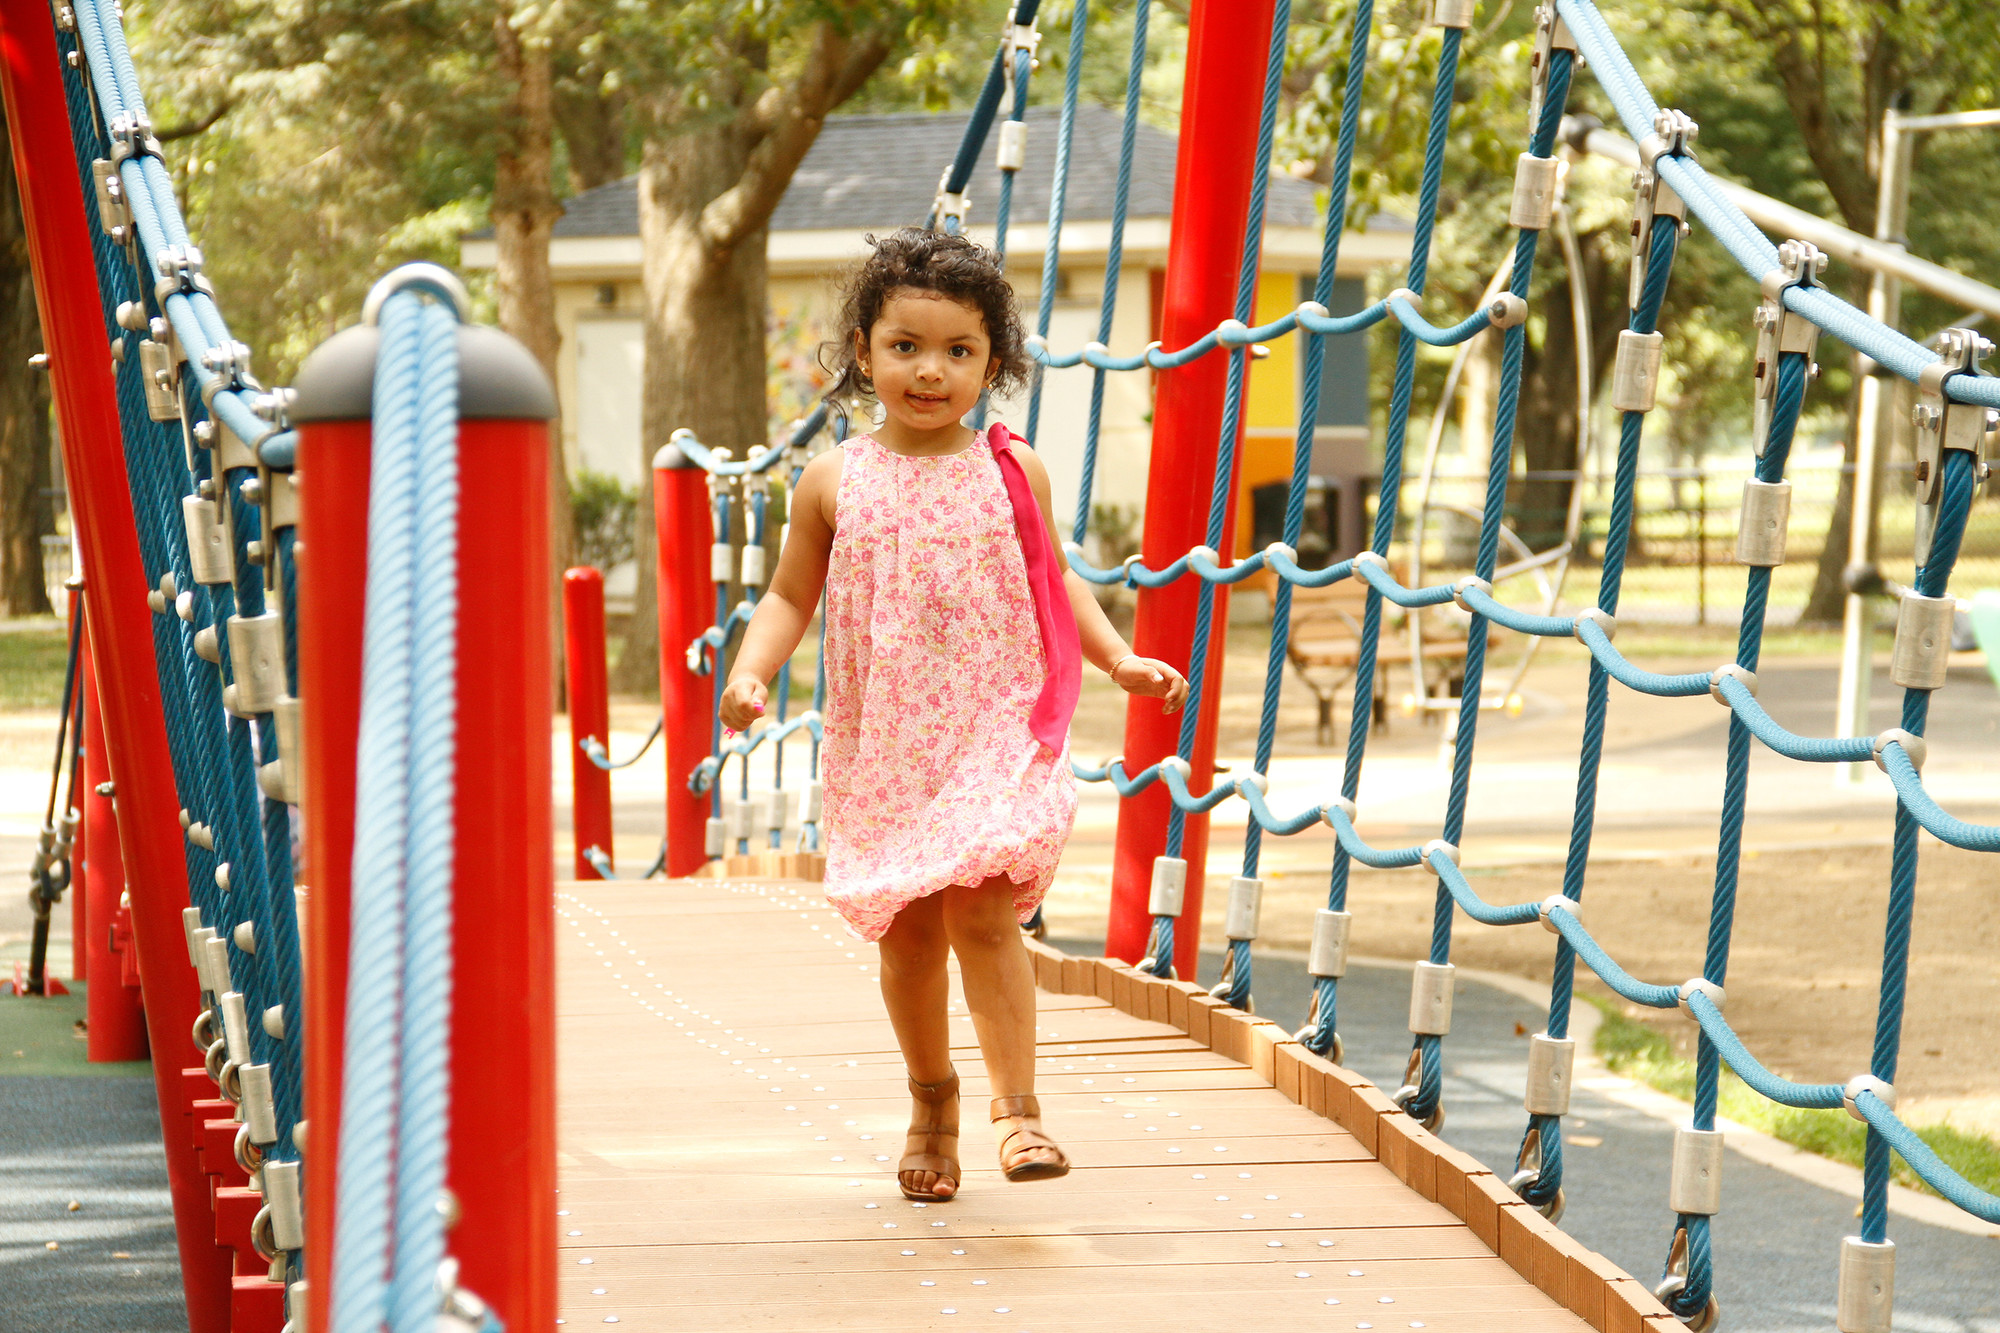 3-year-old Bridget ran across a spacious drawbridge at the park.